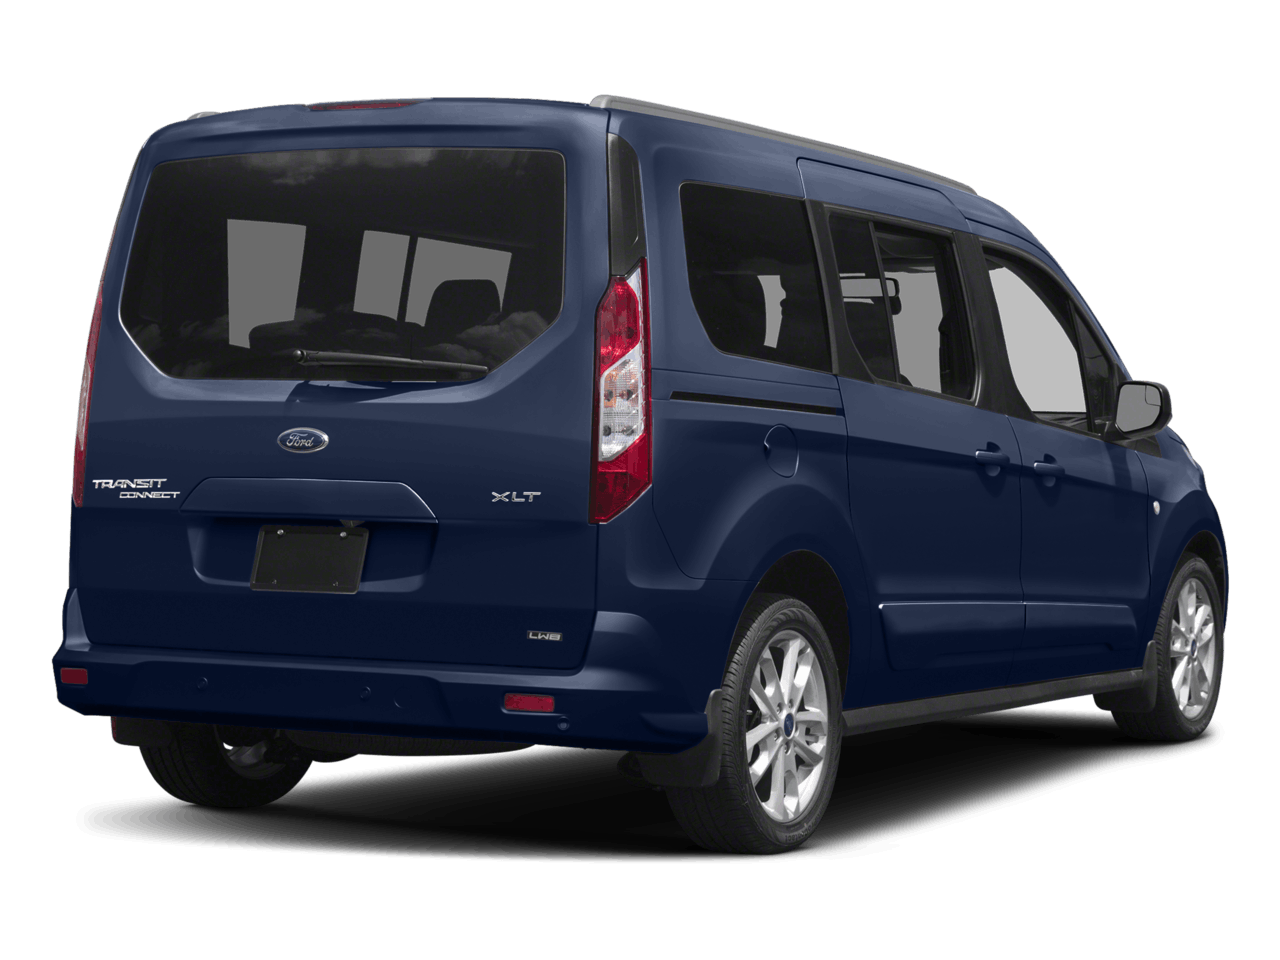 2017 Ford Transit Connect Full-size Passenger Van